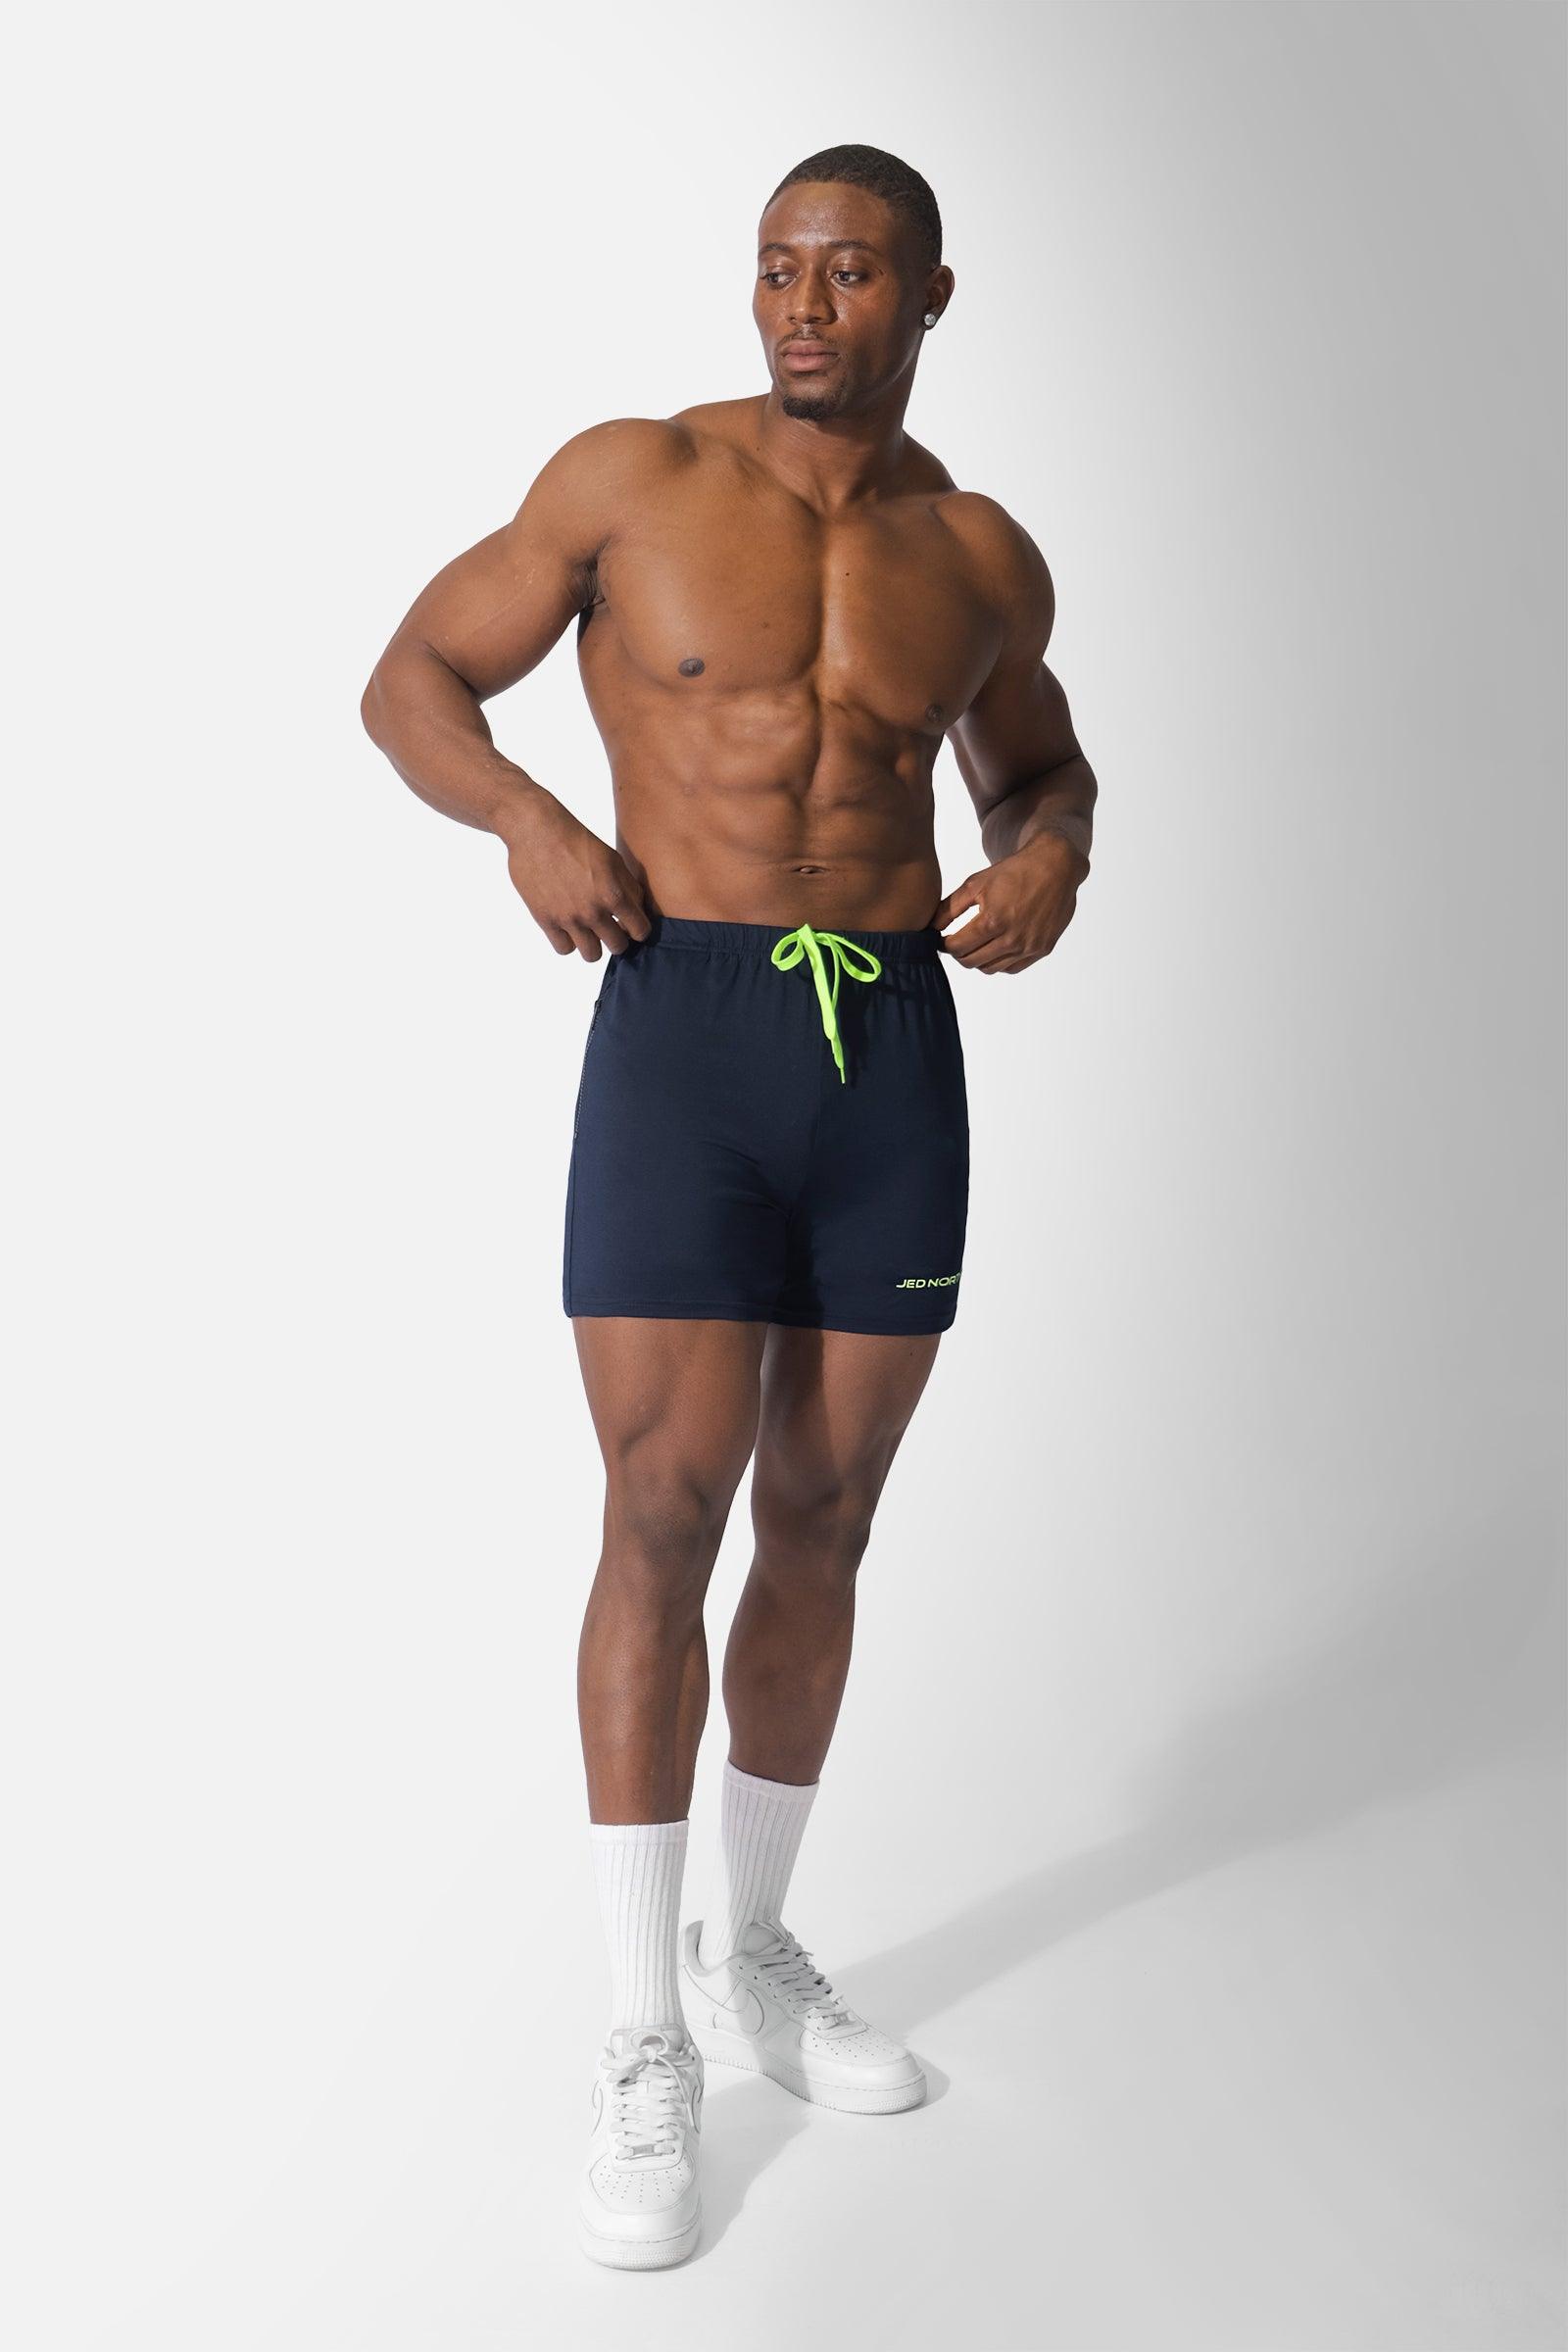 Agile Bodybuilding 4'' Shorts w Zipper Pockets - Navy Blue